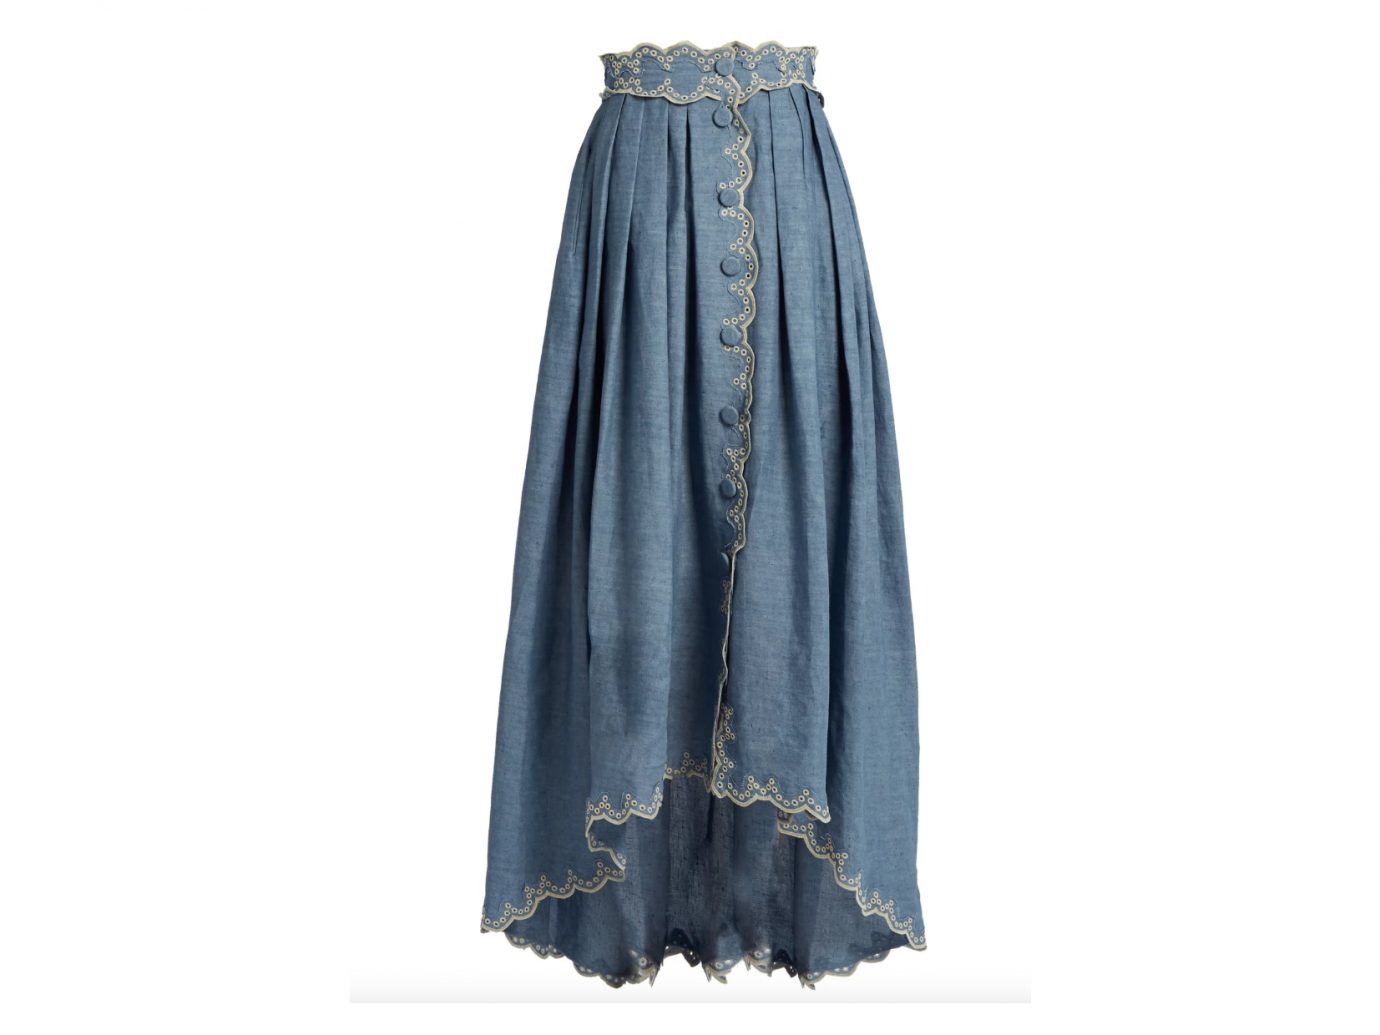 Broderie-anglaise linen-blend skirt